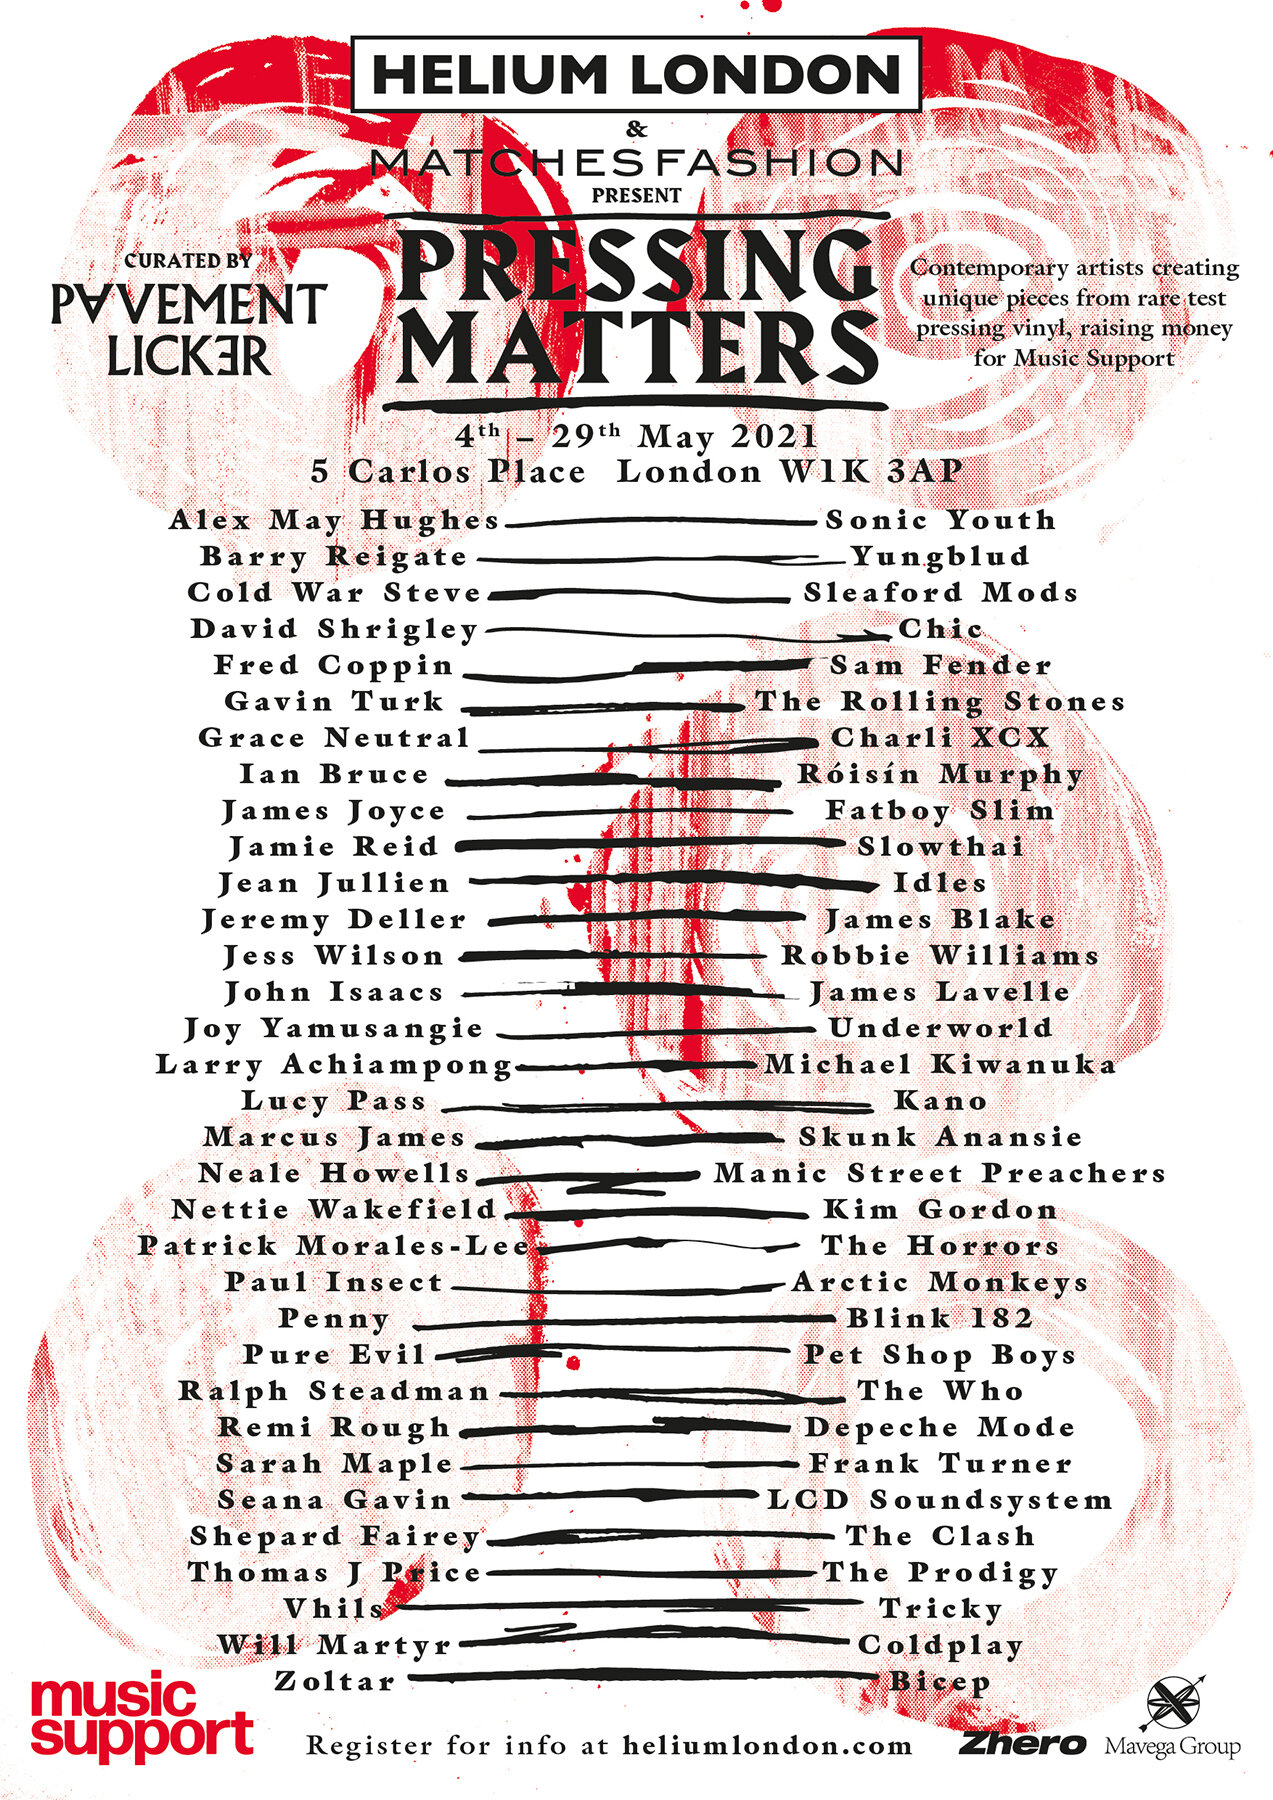 Pavement Licker-Pressing-Matters-Helium-London-MatchesFashion-Line-Up-Poster.jpg